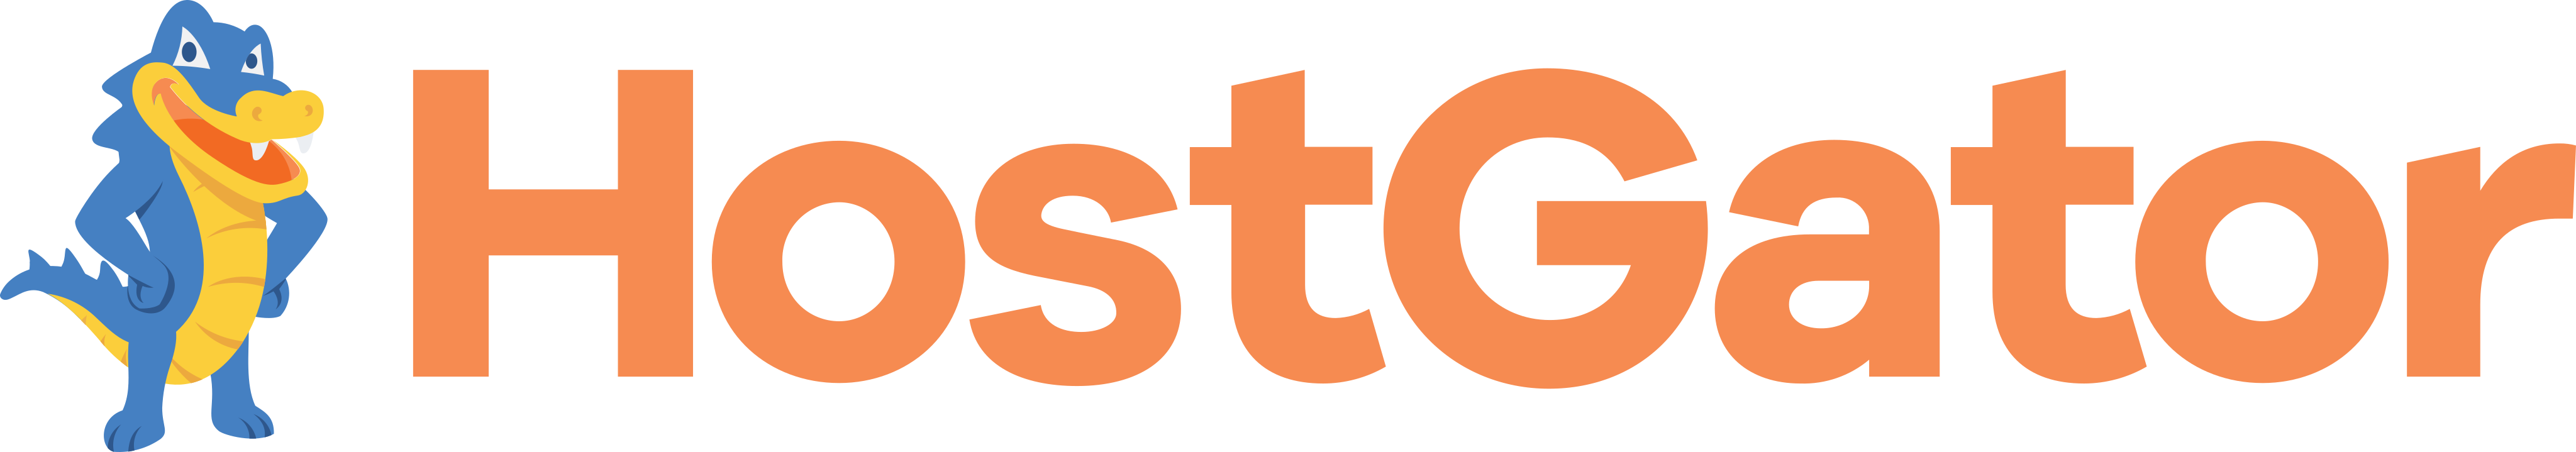 ipage hosting logo image